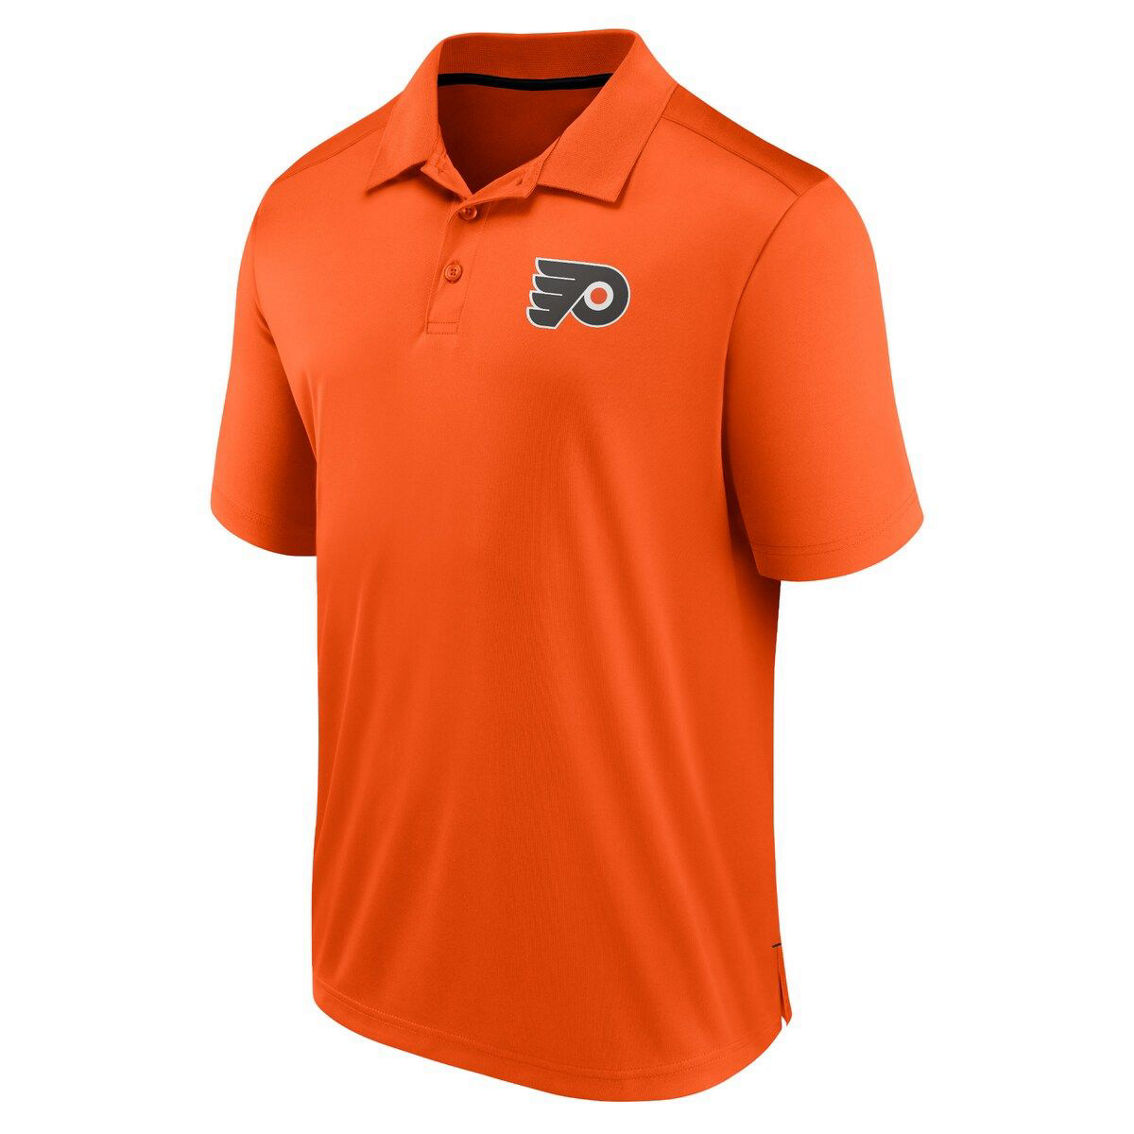 Fanatics Branded Men's Orange Philadelphia Flyers Polo - Image 3 of 4